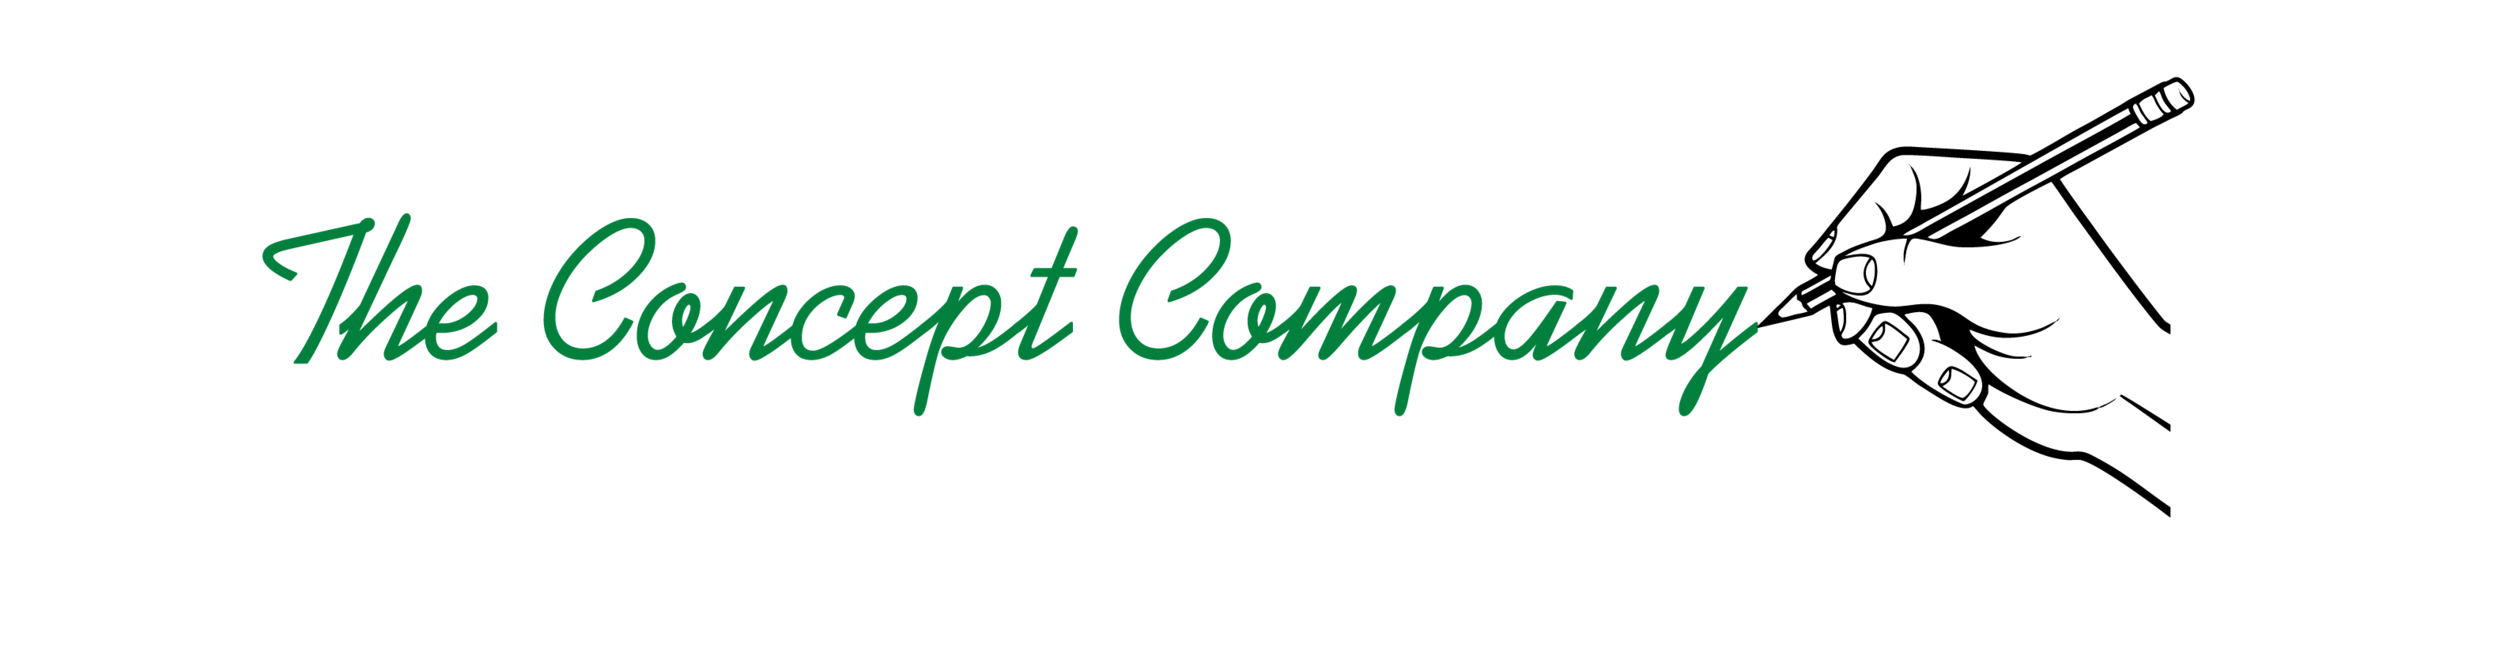 The Concept Company